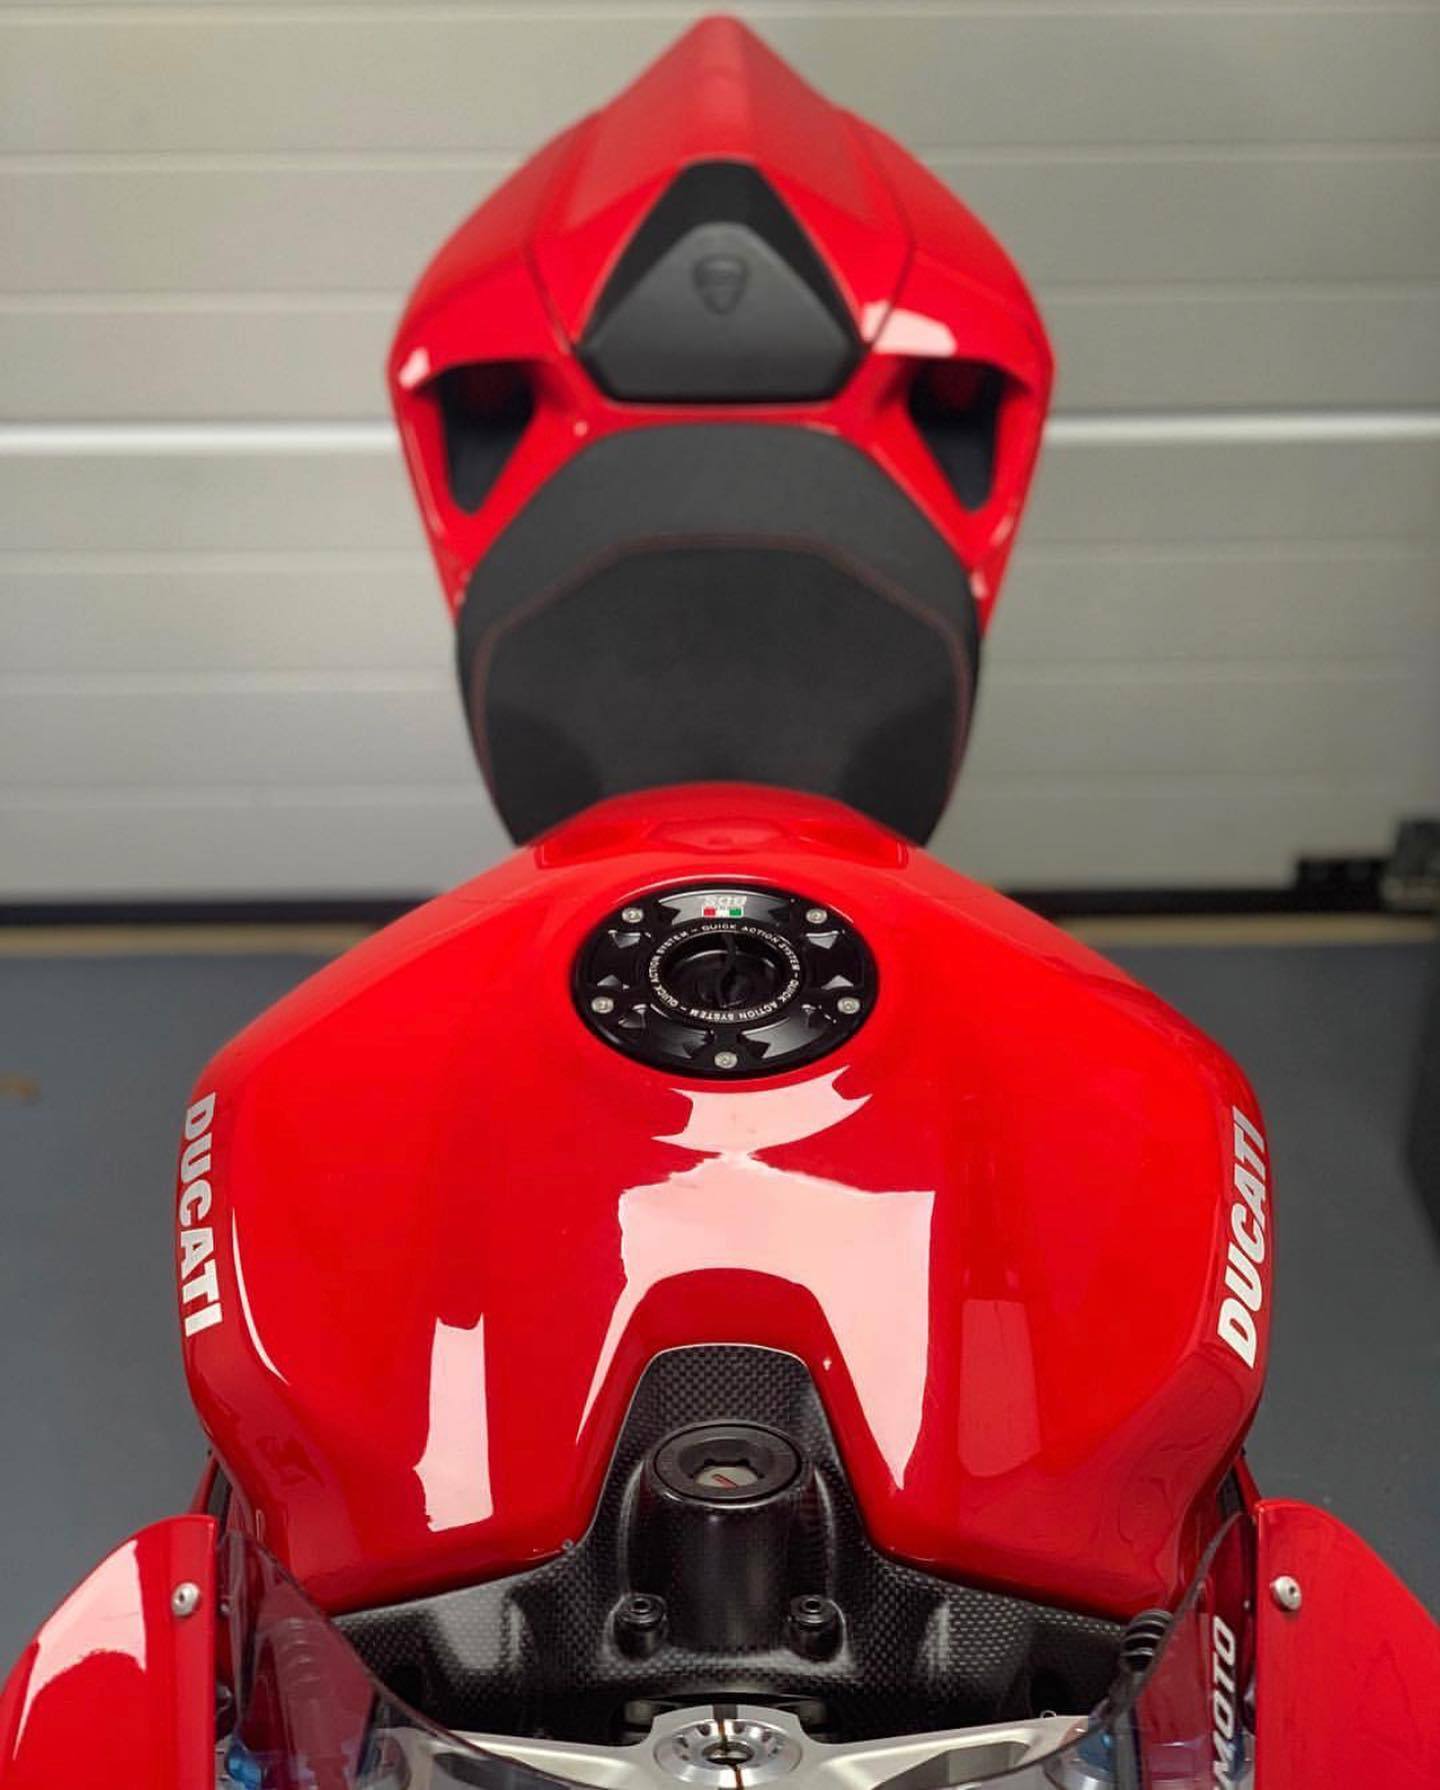 1995-2007 Ducati Monster S4R Quick Action Fuel Cap by TWM